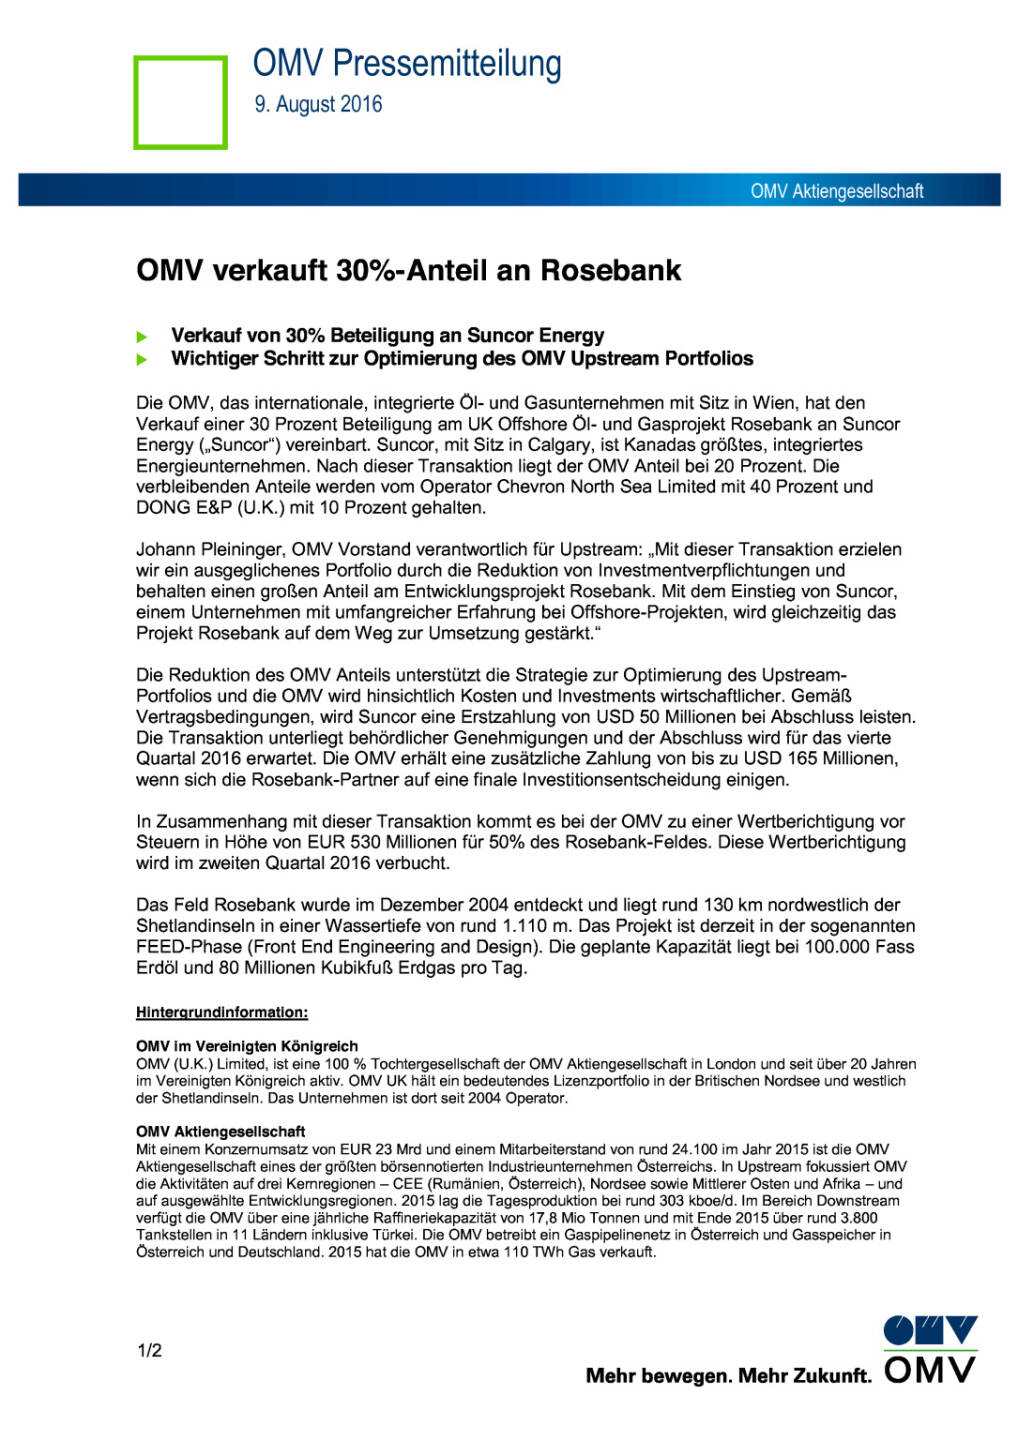 OMV verkauft 30%-Anteil an Rosebank, Seite 1/2, komplettes Dokument unter http://boerse-social.com/static/uploads/file_1591_omv_verkauft_30-anteil_an_rosebank.pdf